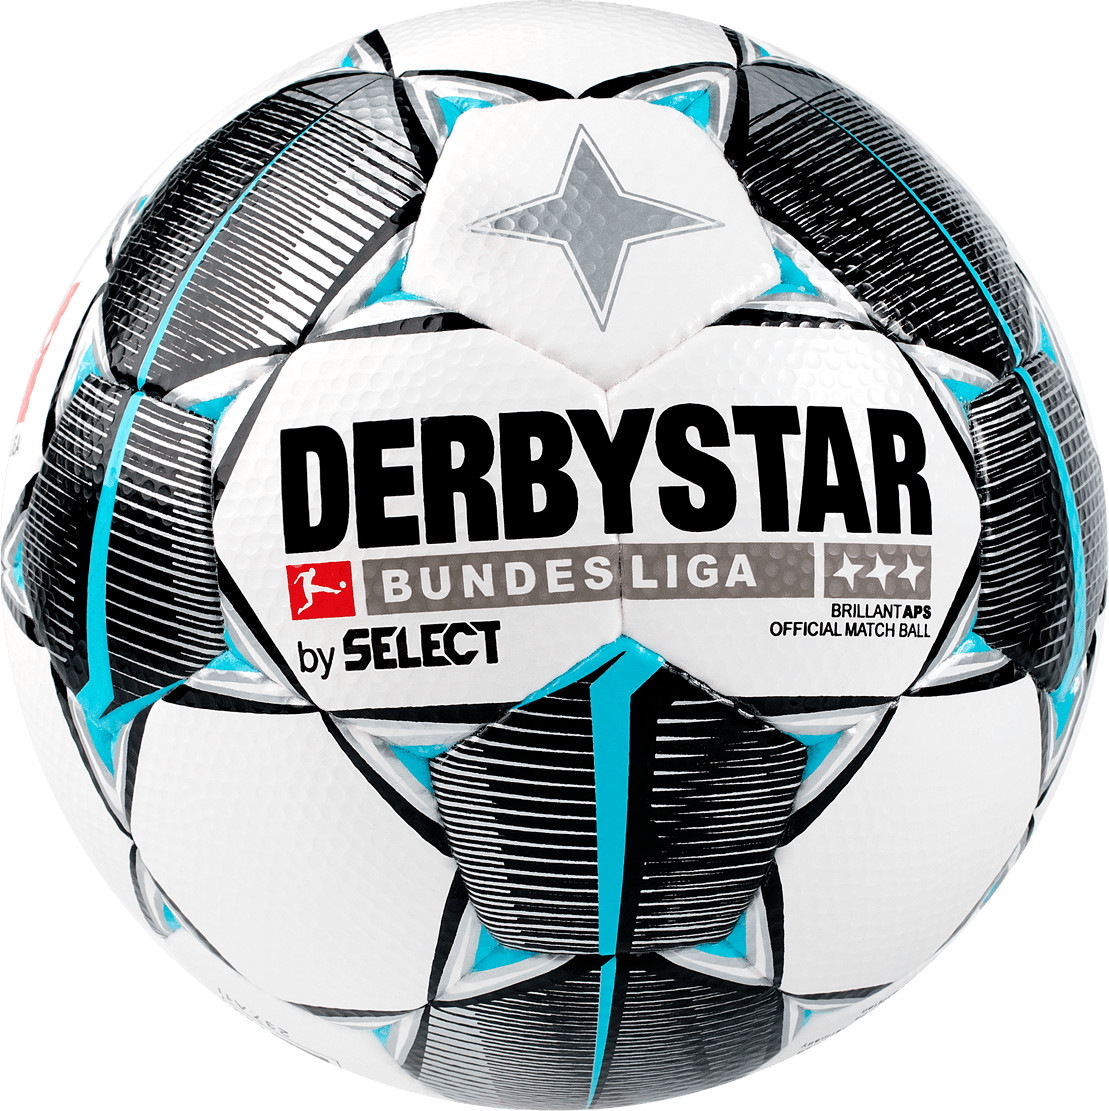 Derbystar Brillant APS OMB € ab bei Preisvergleich (1802500019) | 2019/20 139,95